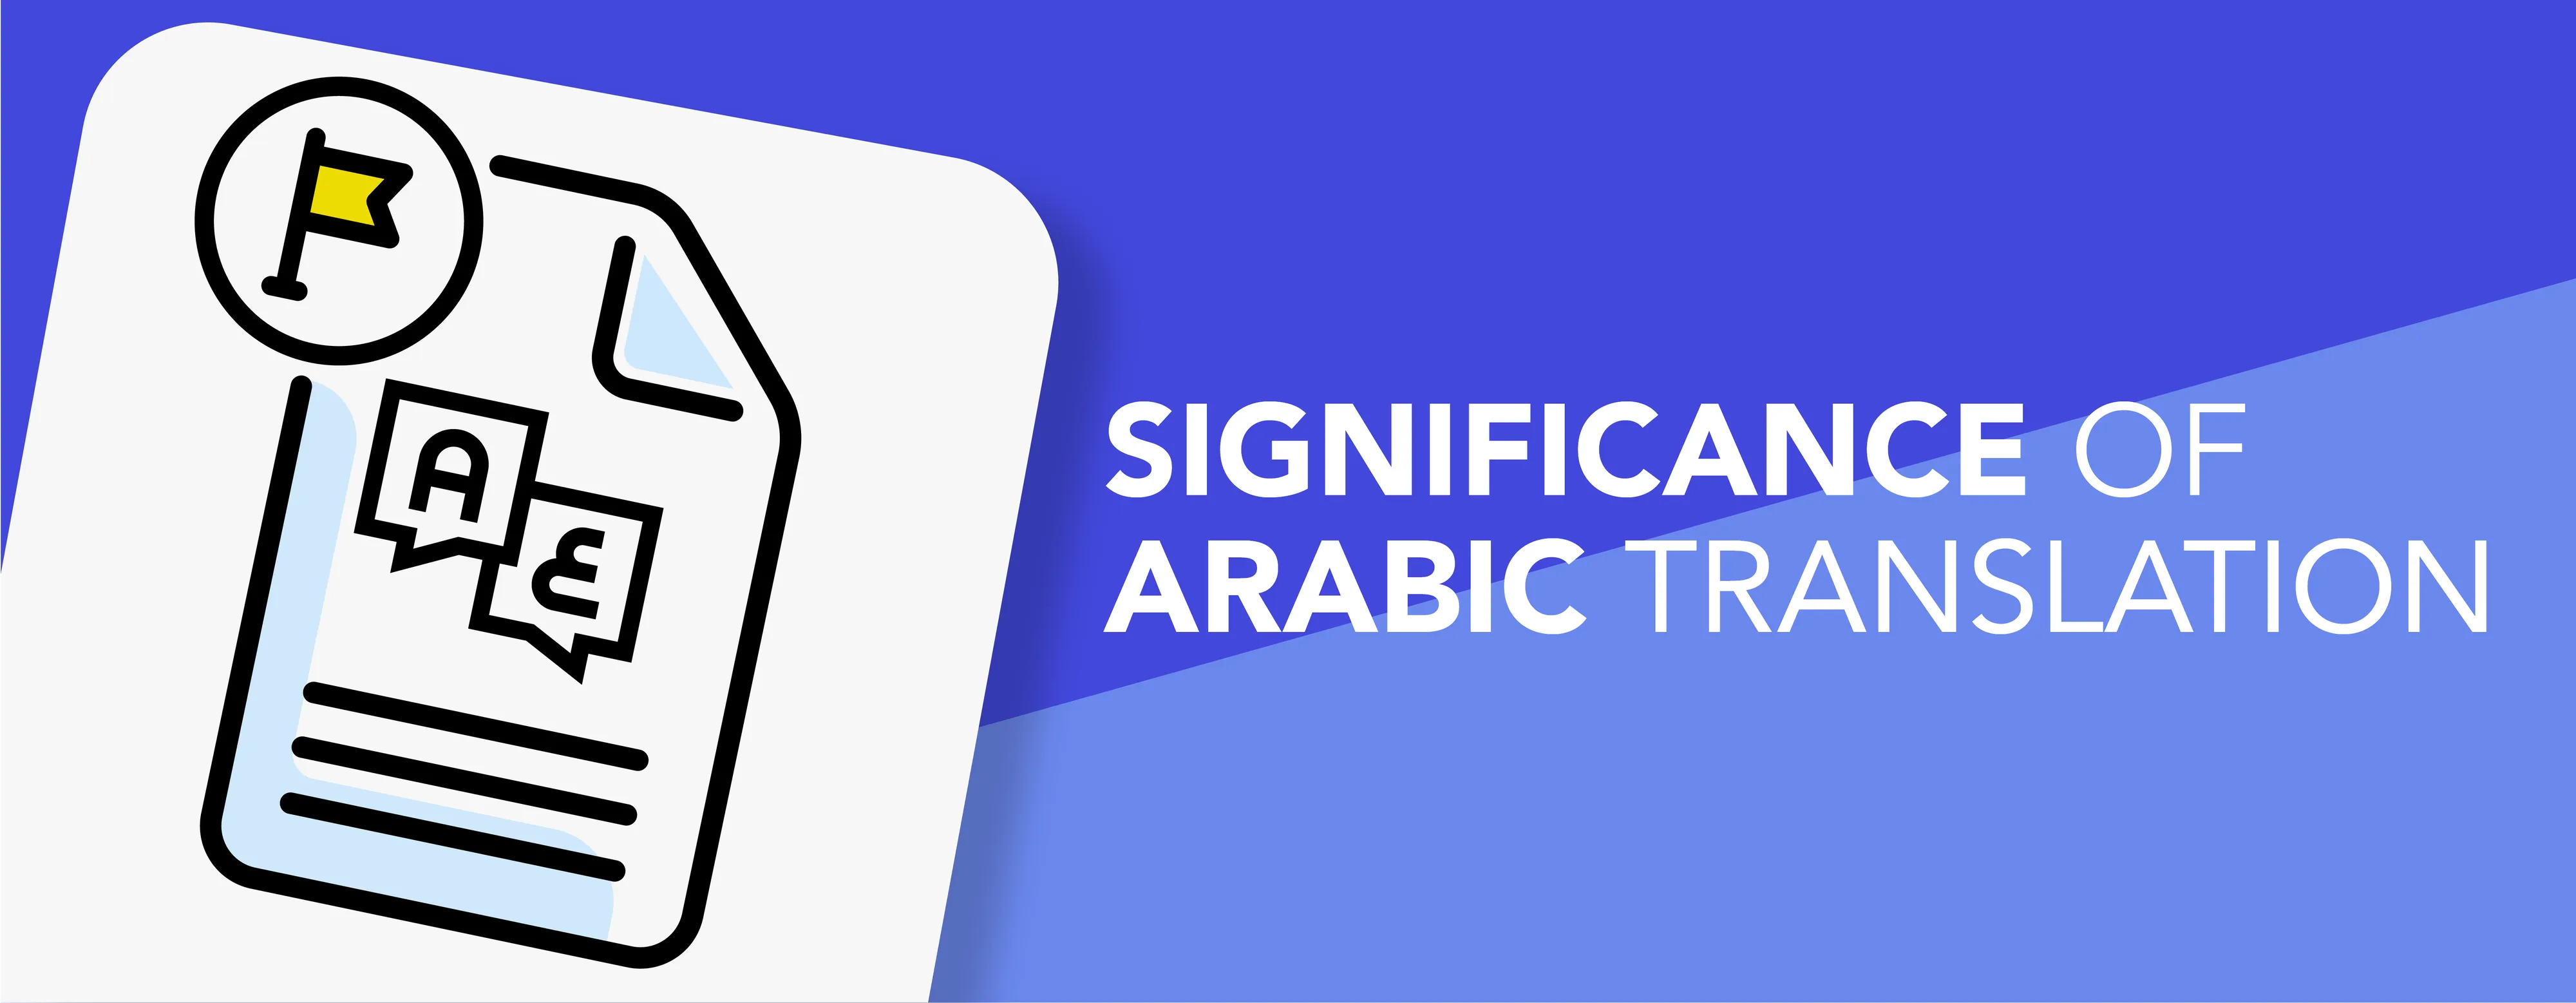 arabic translation 